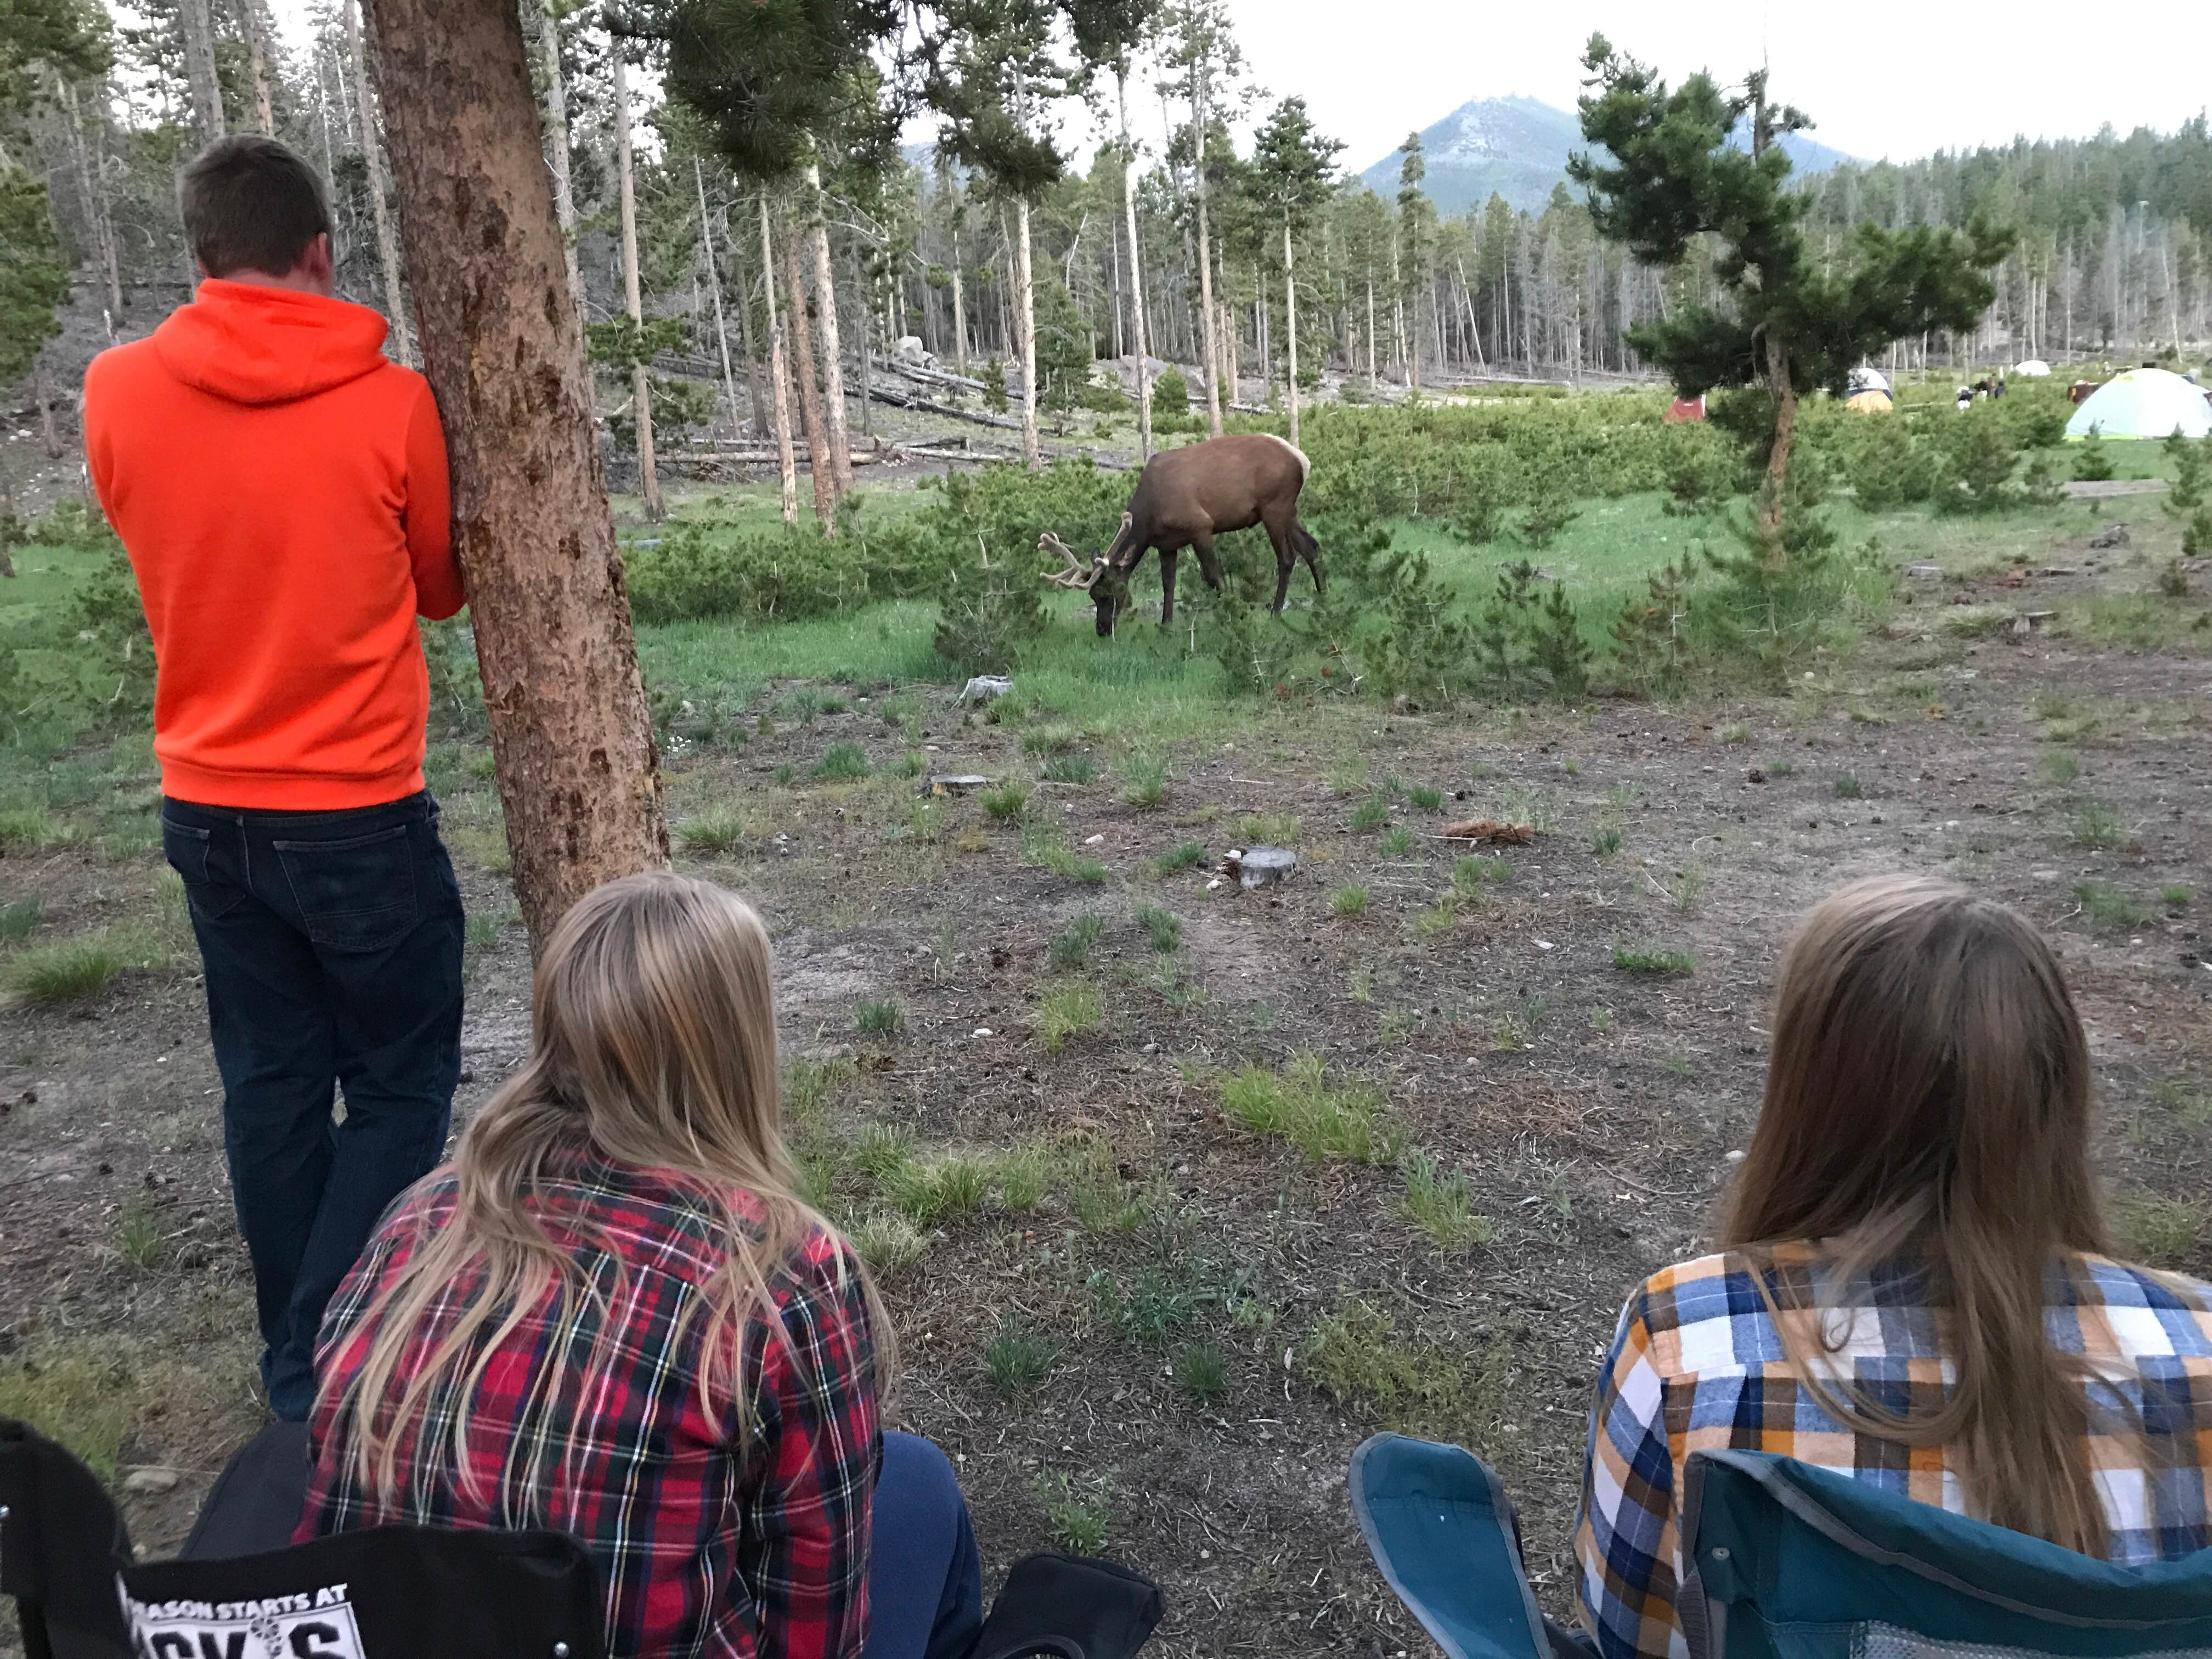 watching elk wander through our site